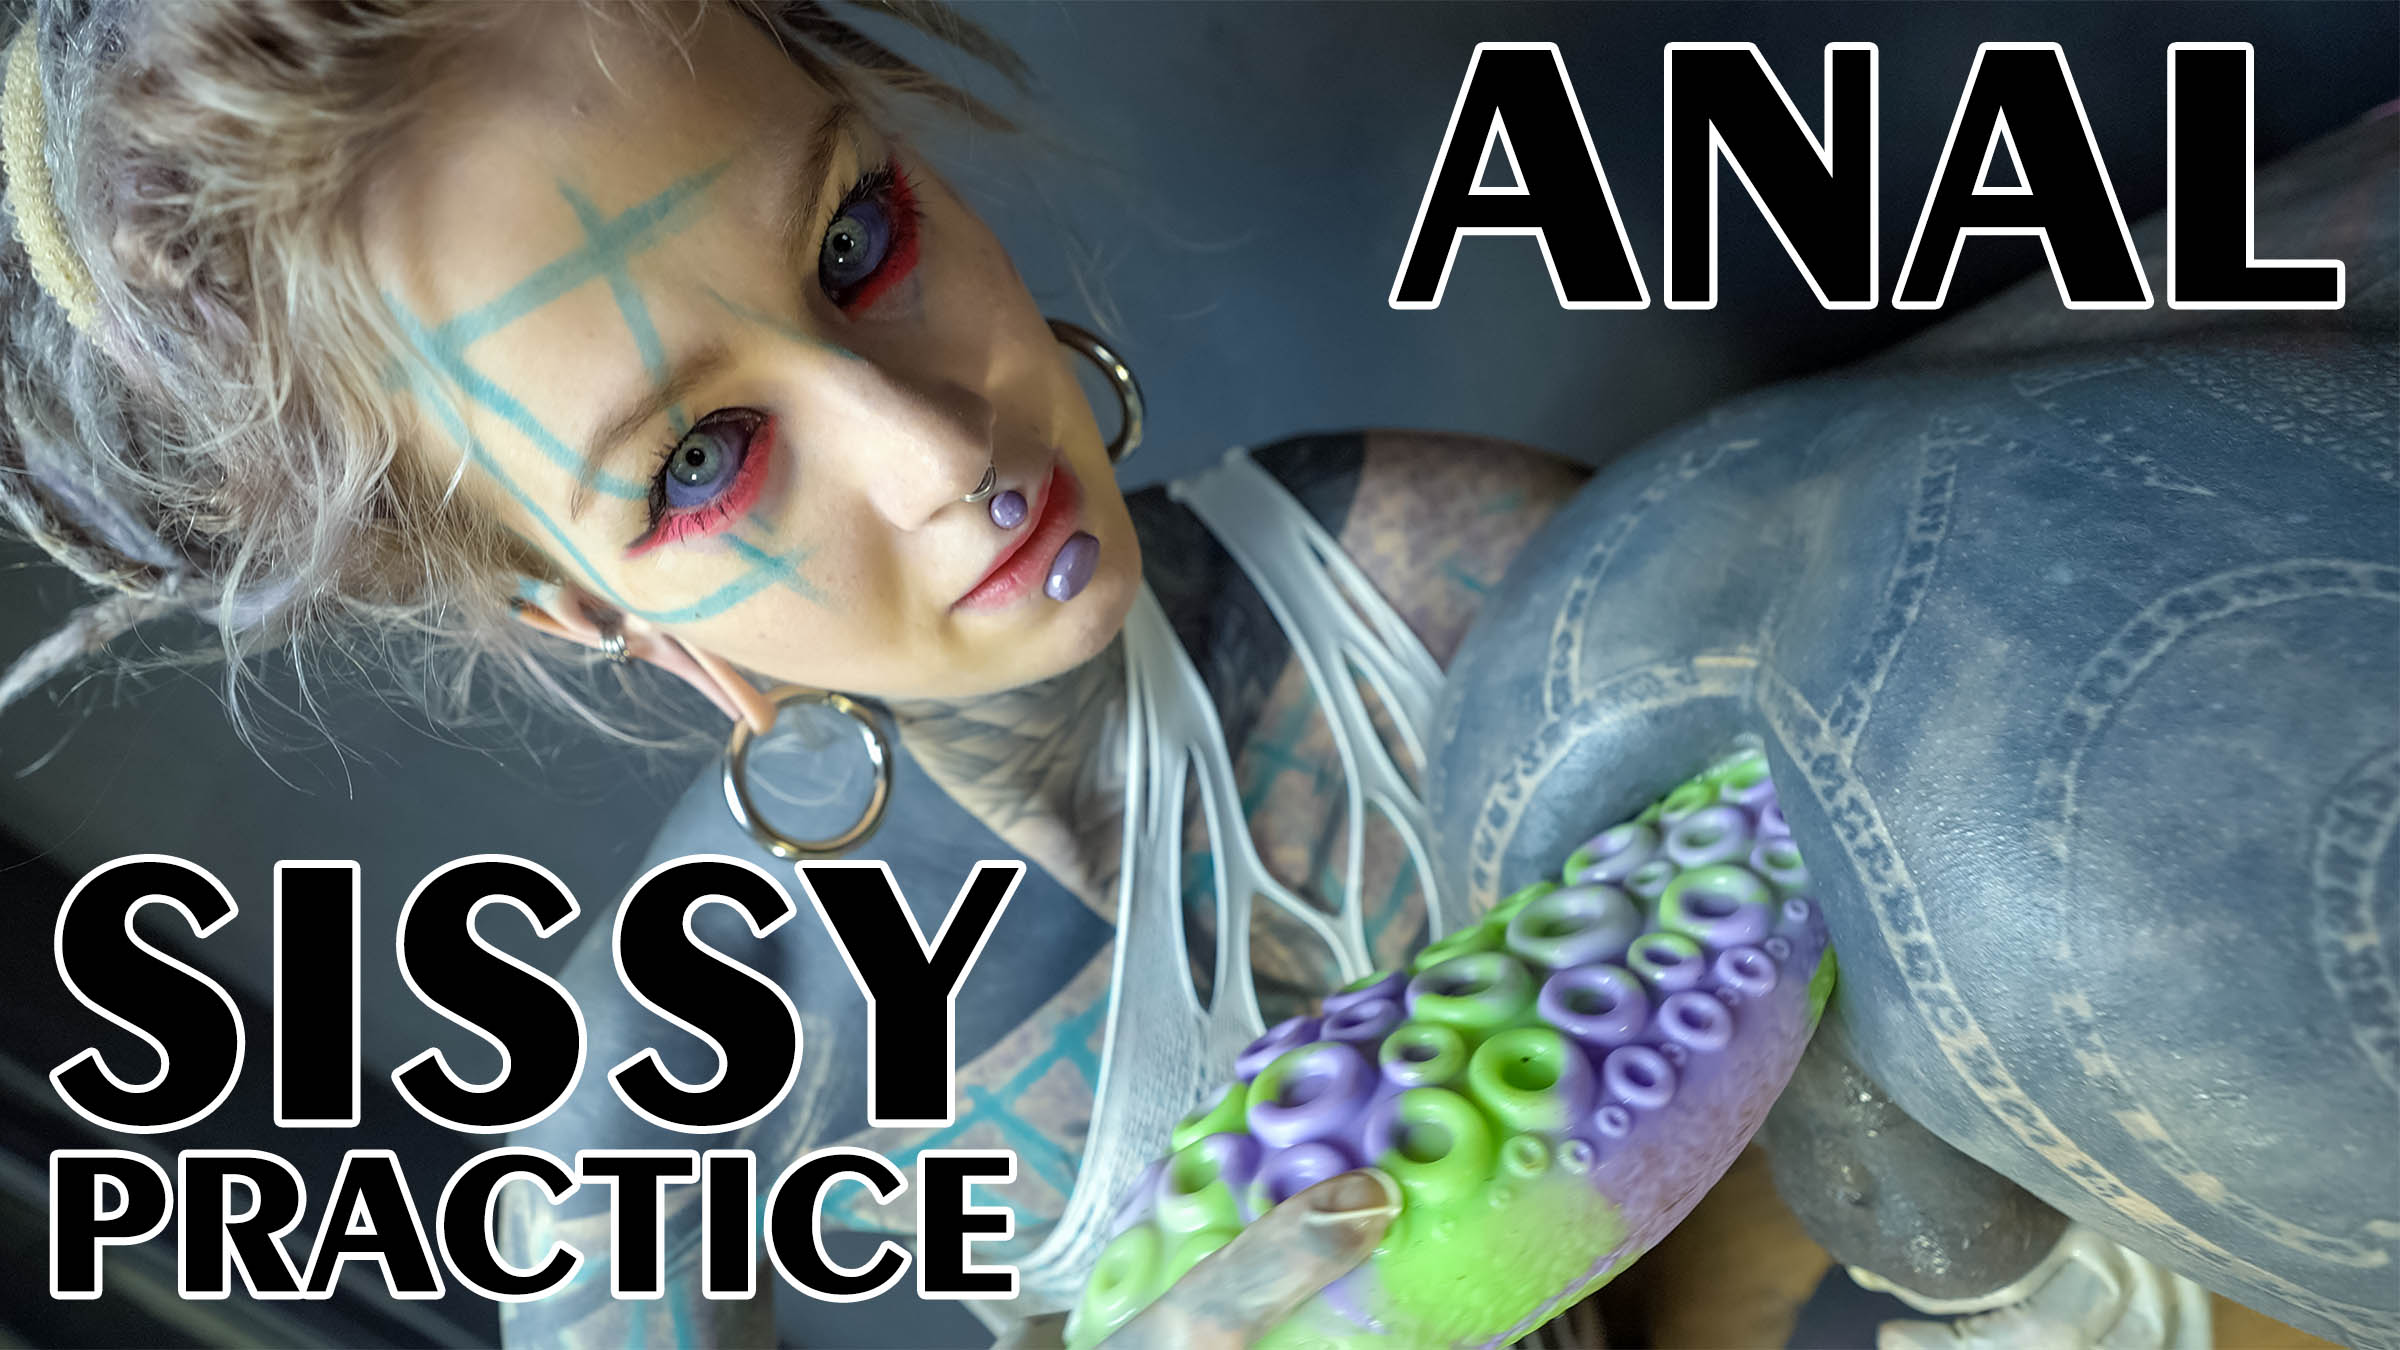 Anuskatzz “Anal Sissy Practice” Z-Filmz-Originals